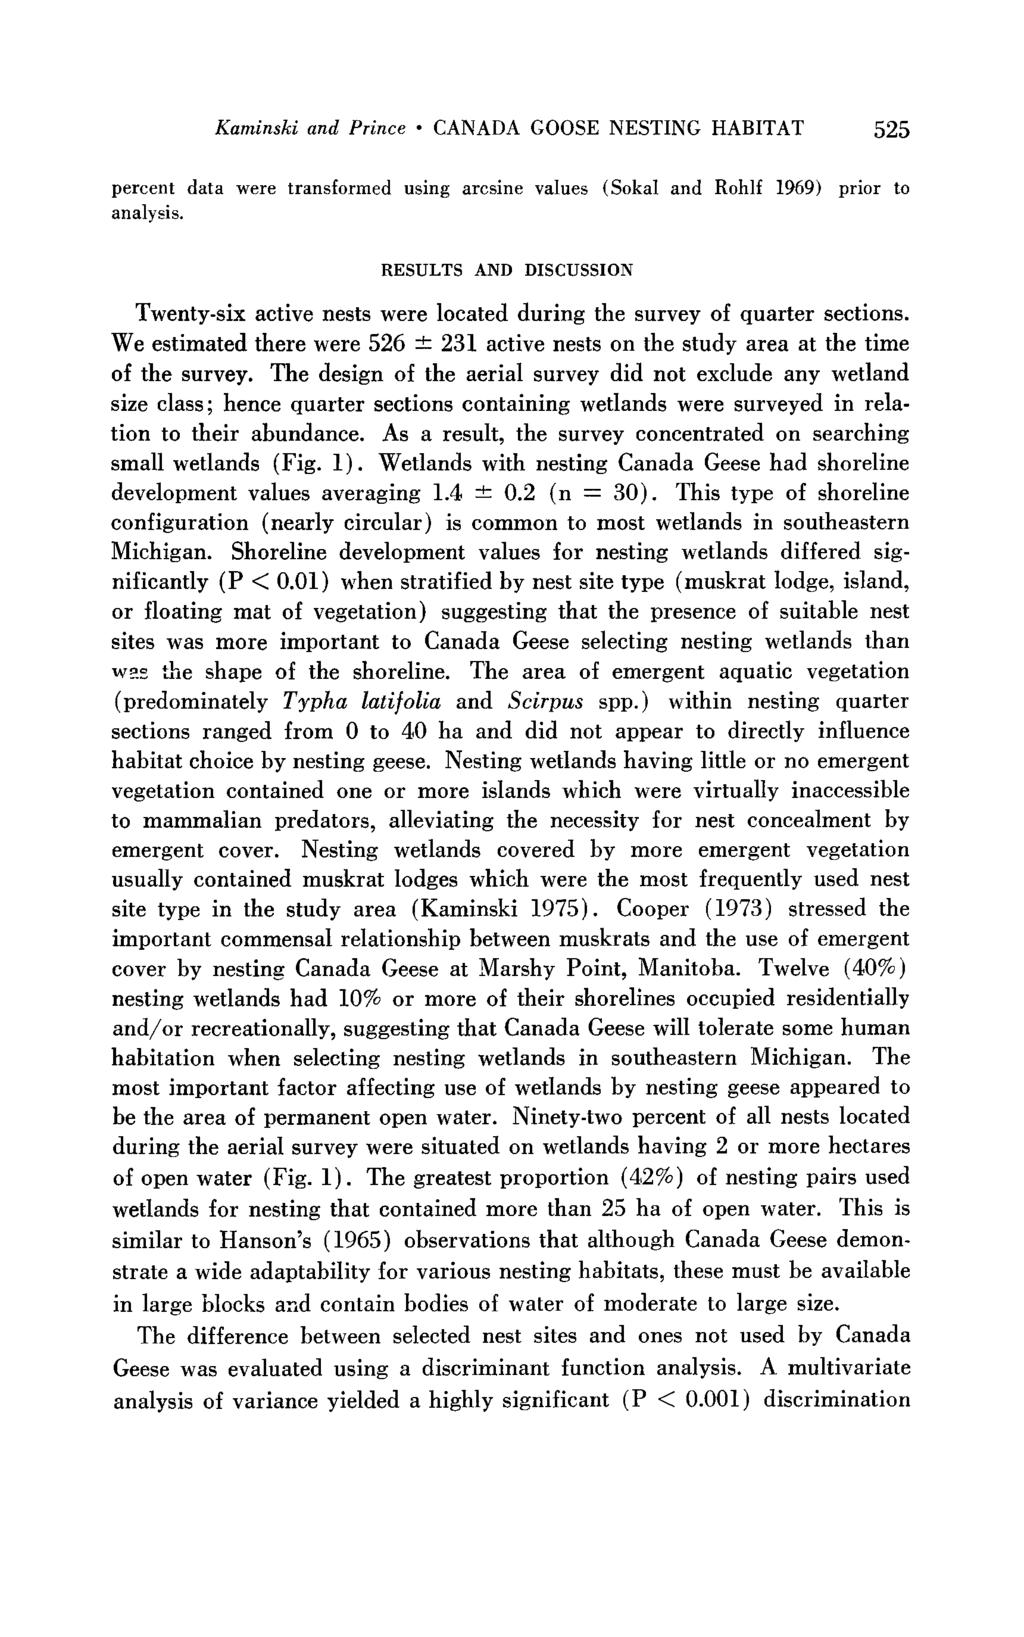 Kaminski and Prince * CANADA GOOSE NESTING HABITAT 525 percent data were transformed using arcsine values (Sokal and Rohlf 1969) analysis.